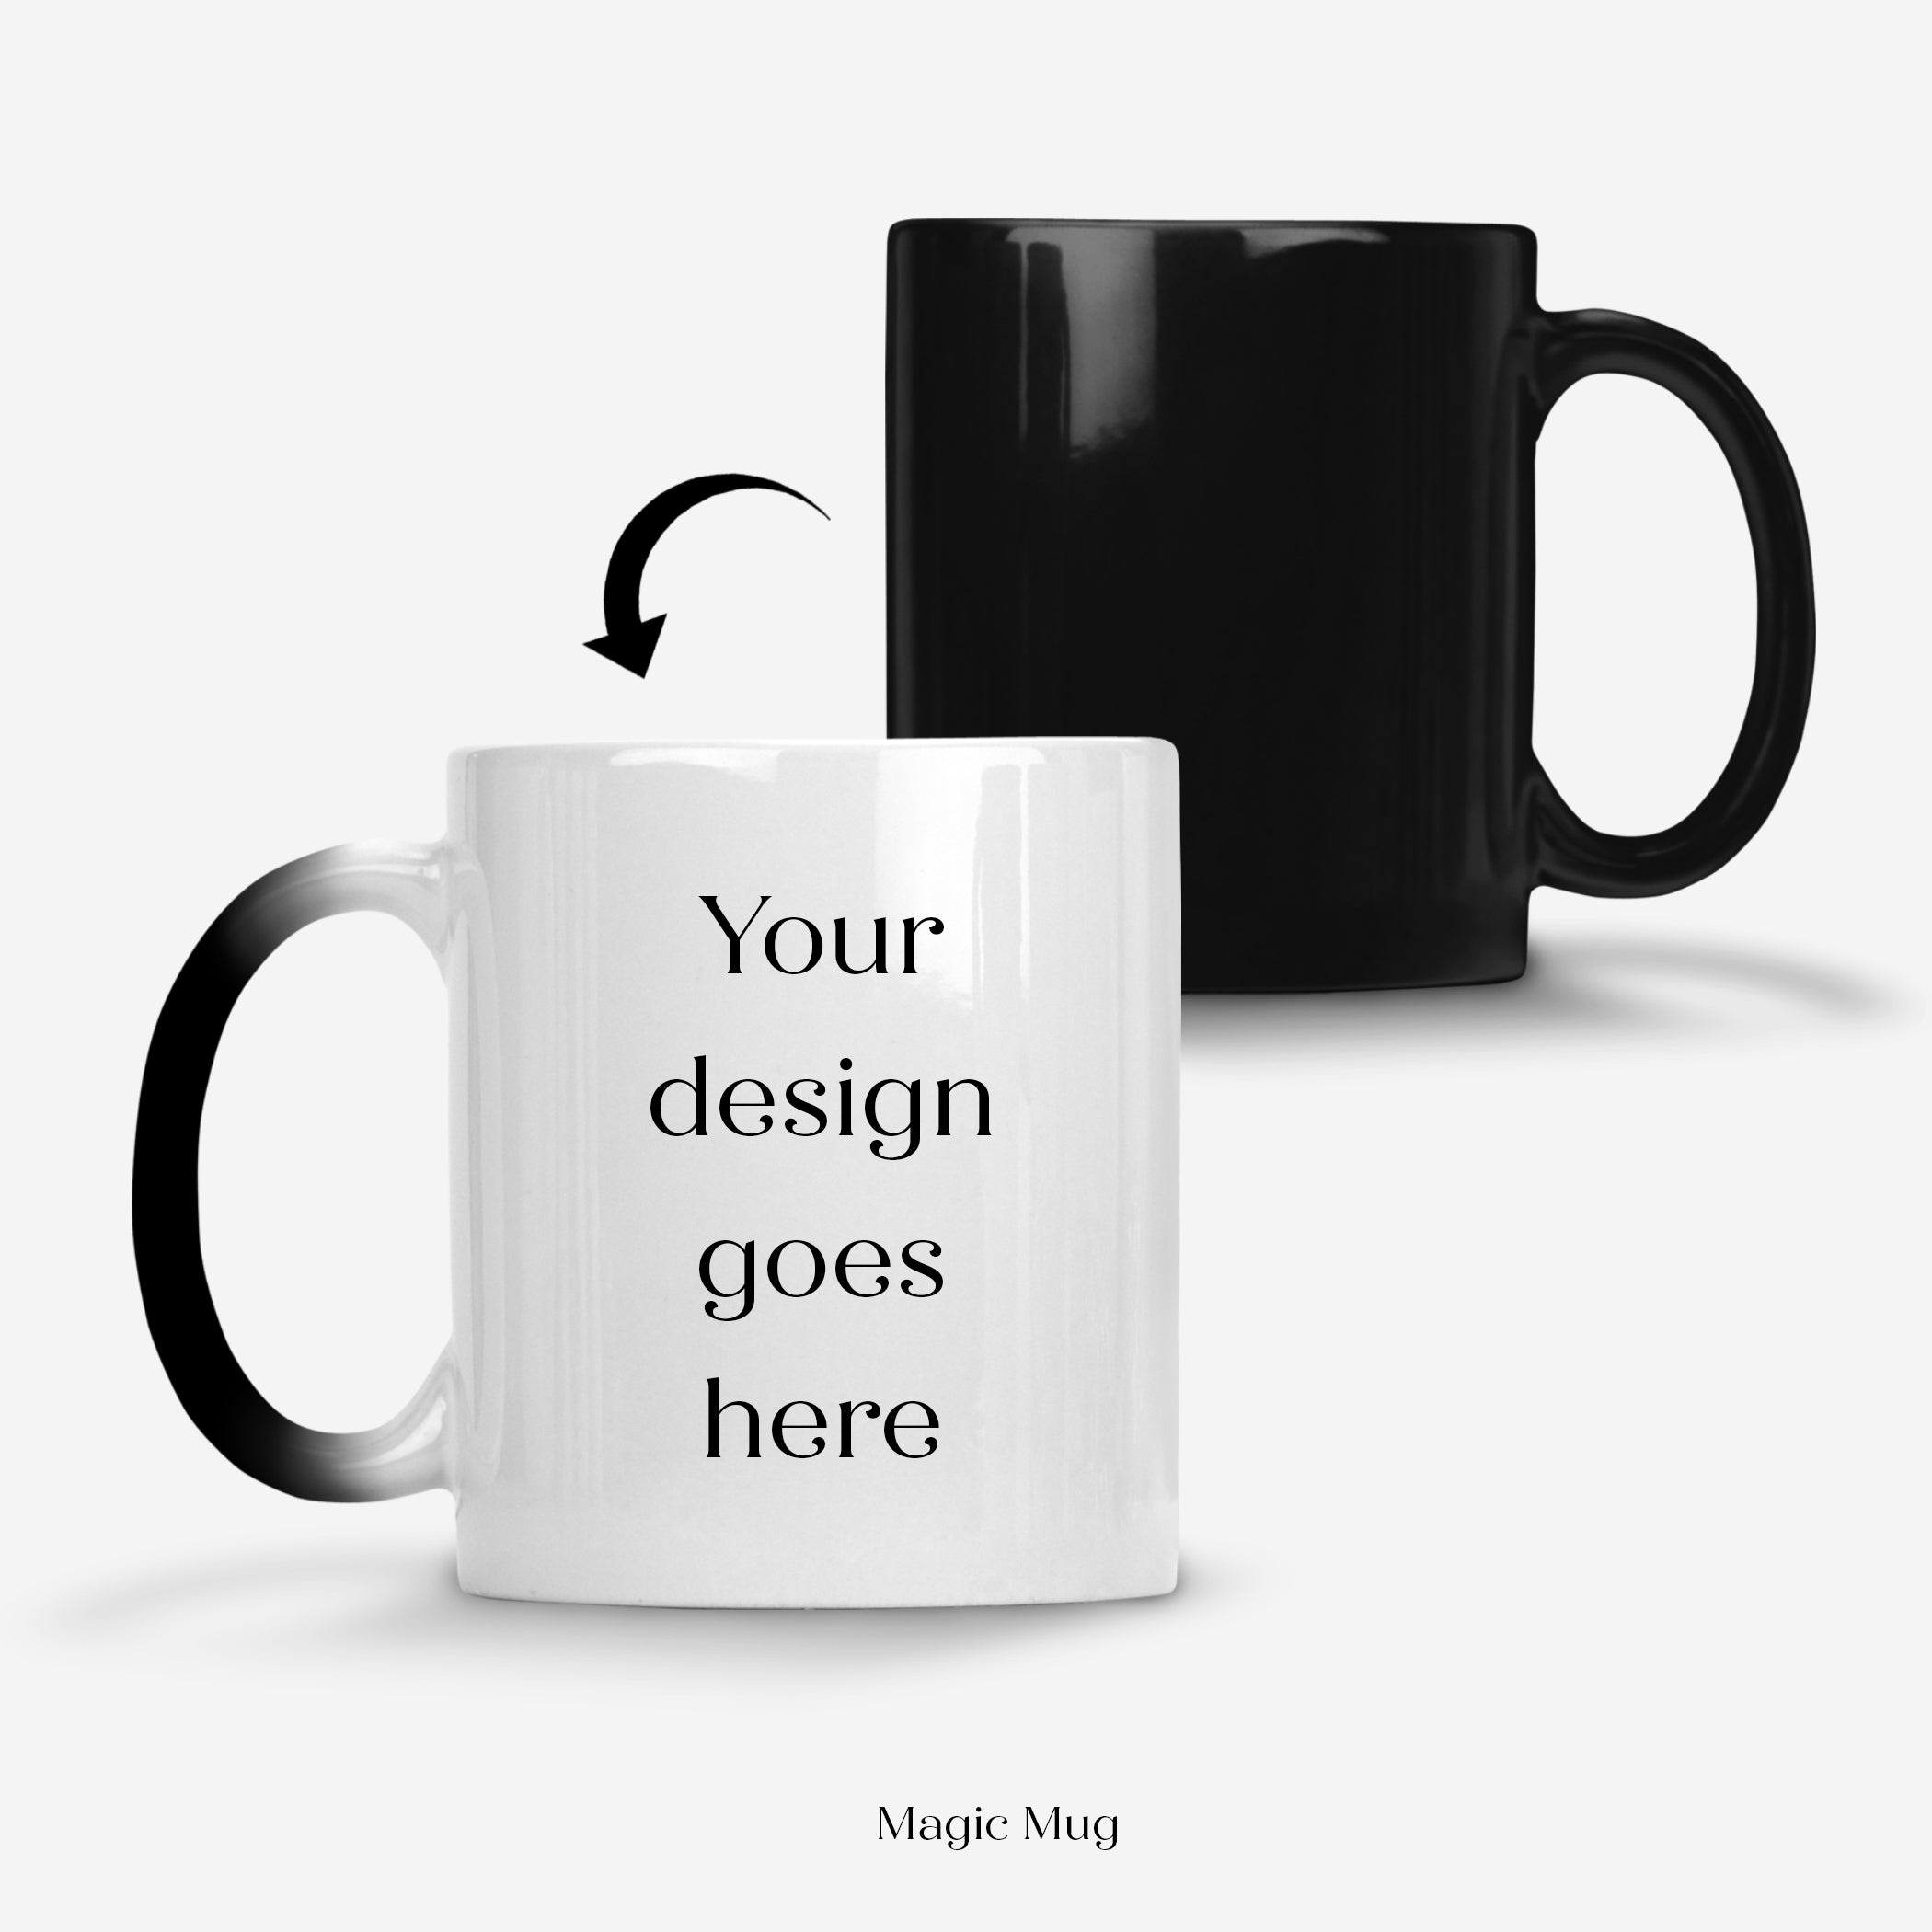 Create Your Own - Magic Mug